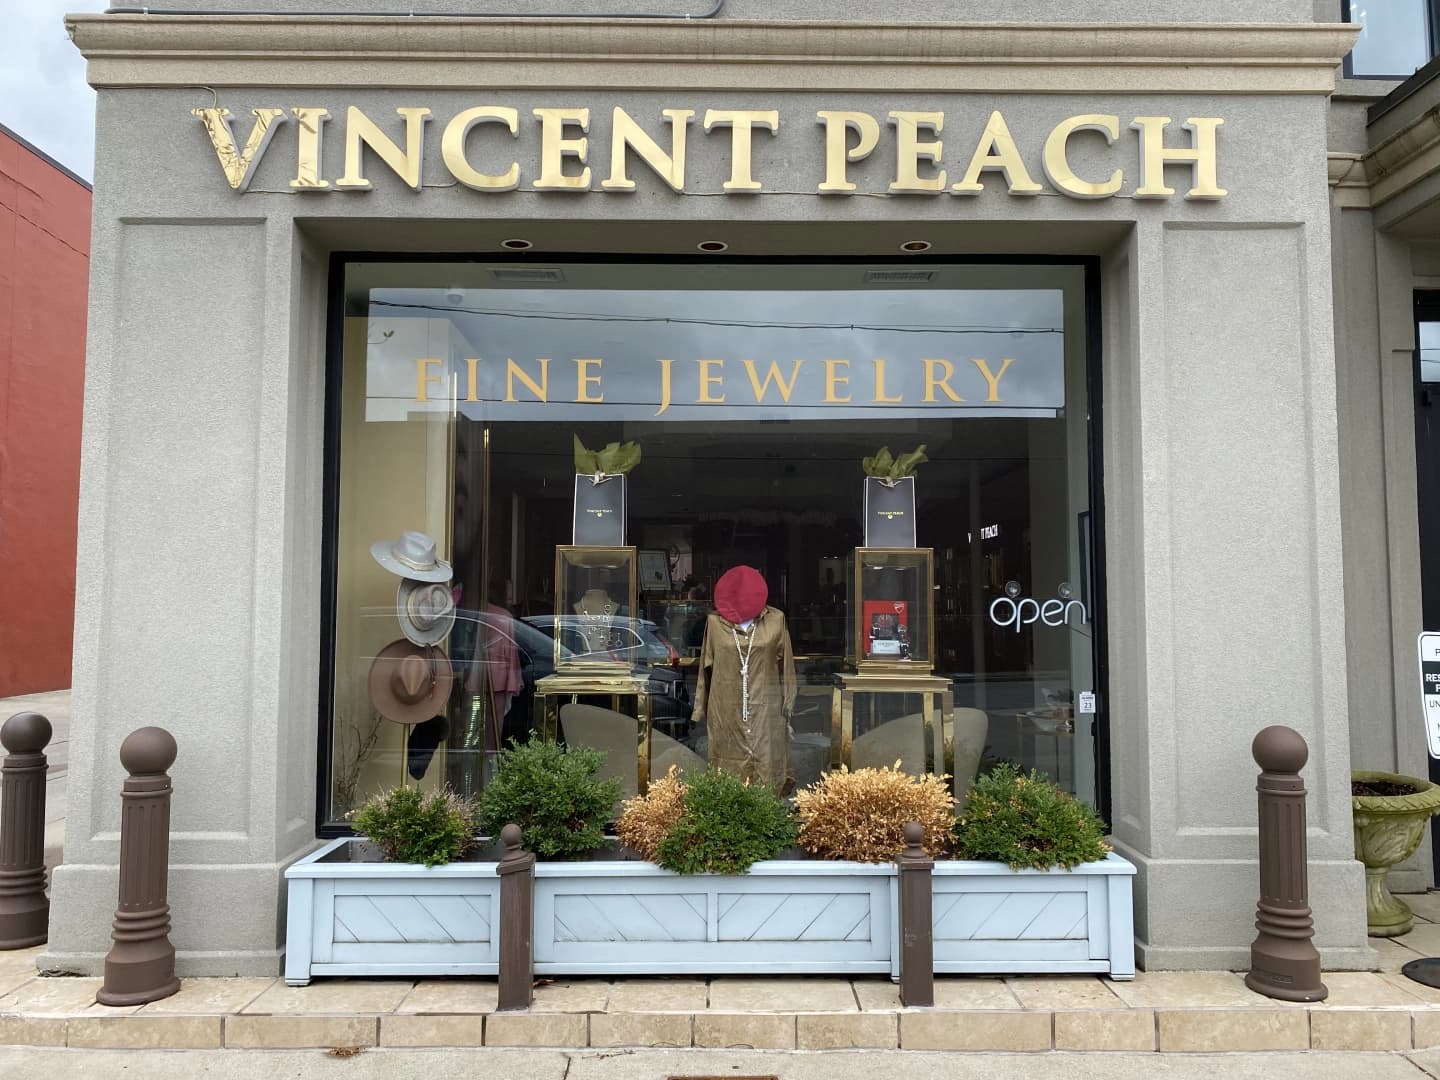 Vincent Peach Fine Jewelry